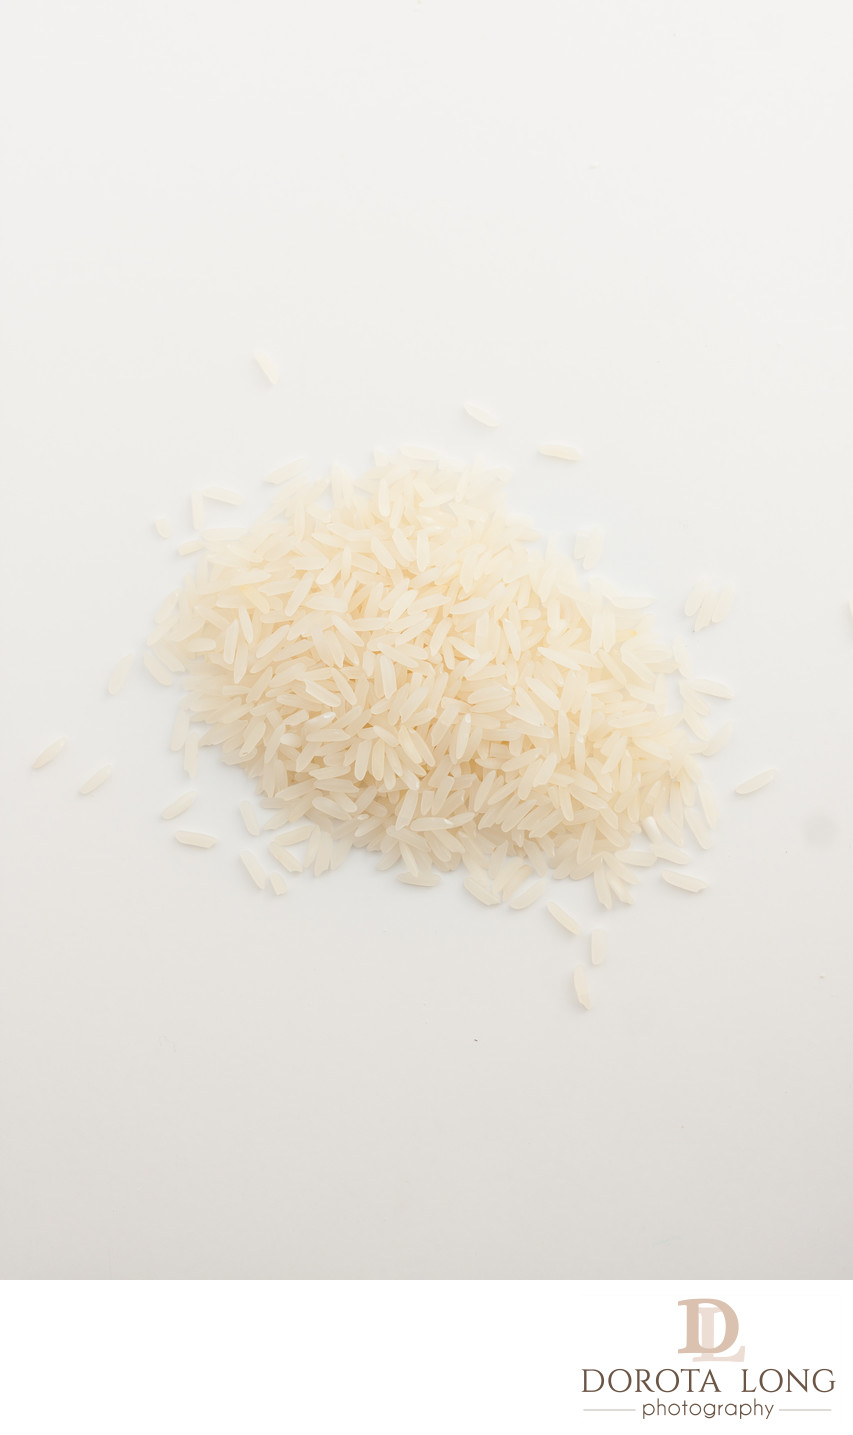 white rice spilled on white background